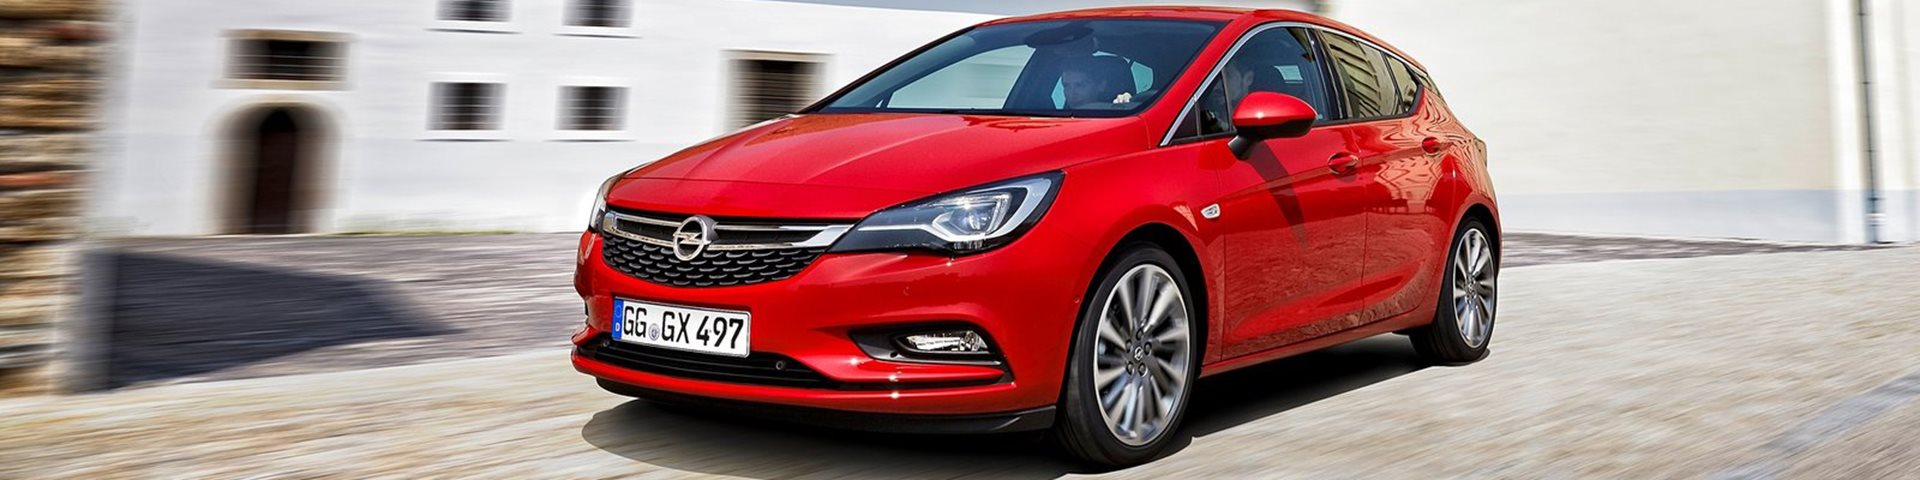 Lp Opel Astra Usados Serviço